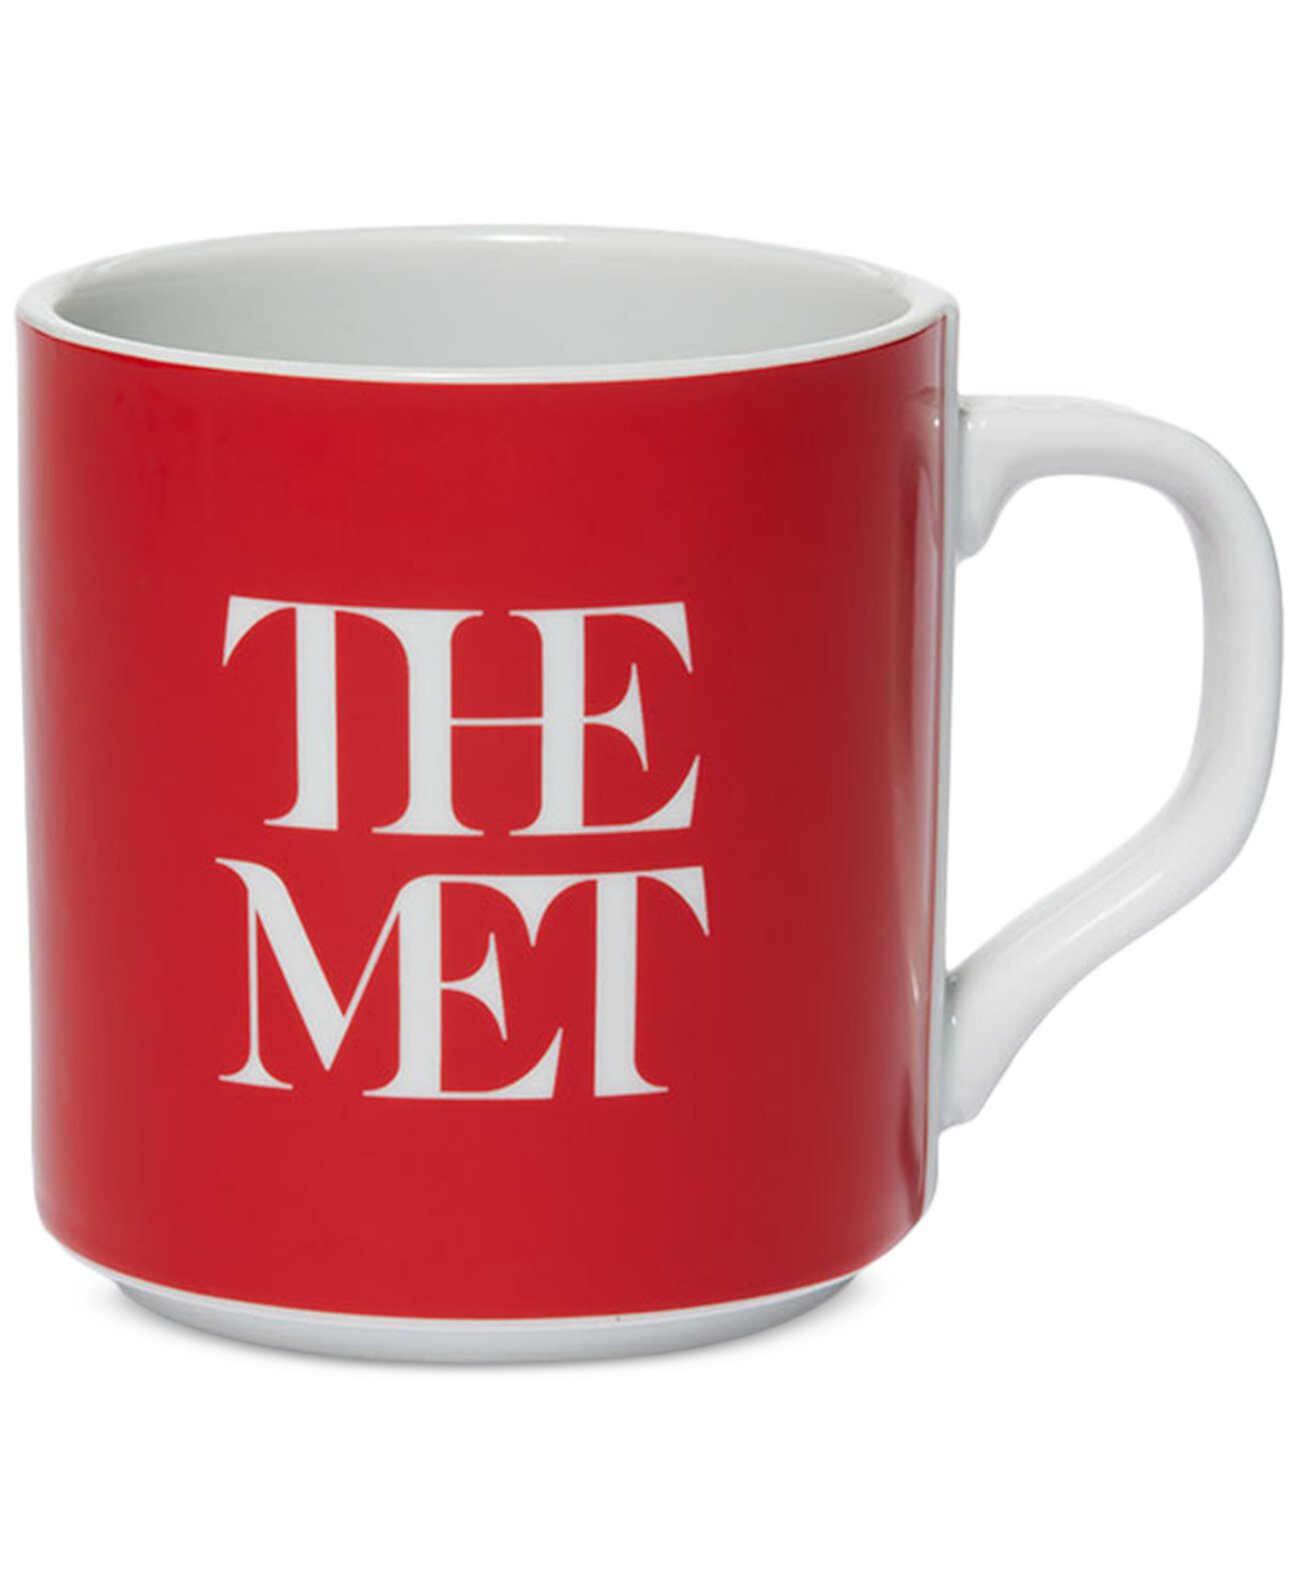 Кружка с логотипом Met The Metropolitan Museum of Art